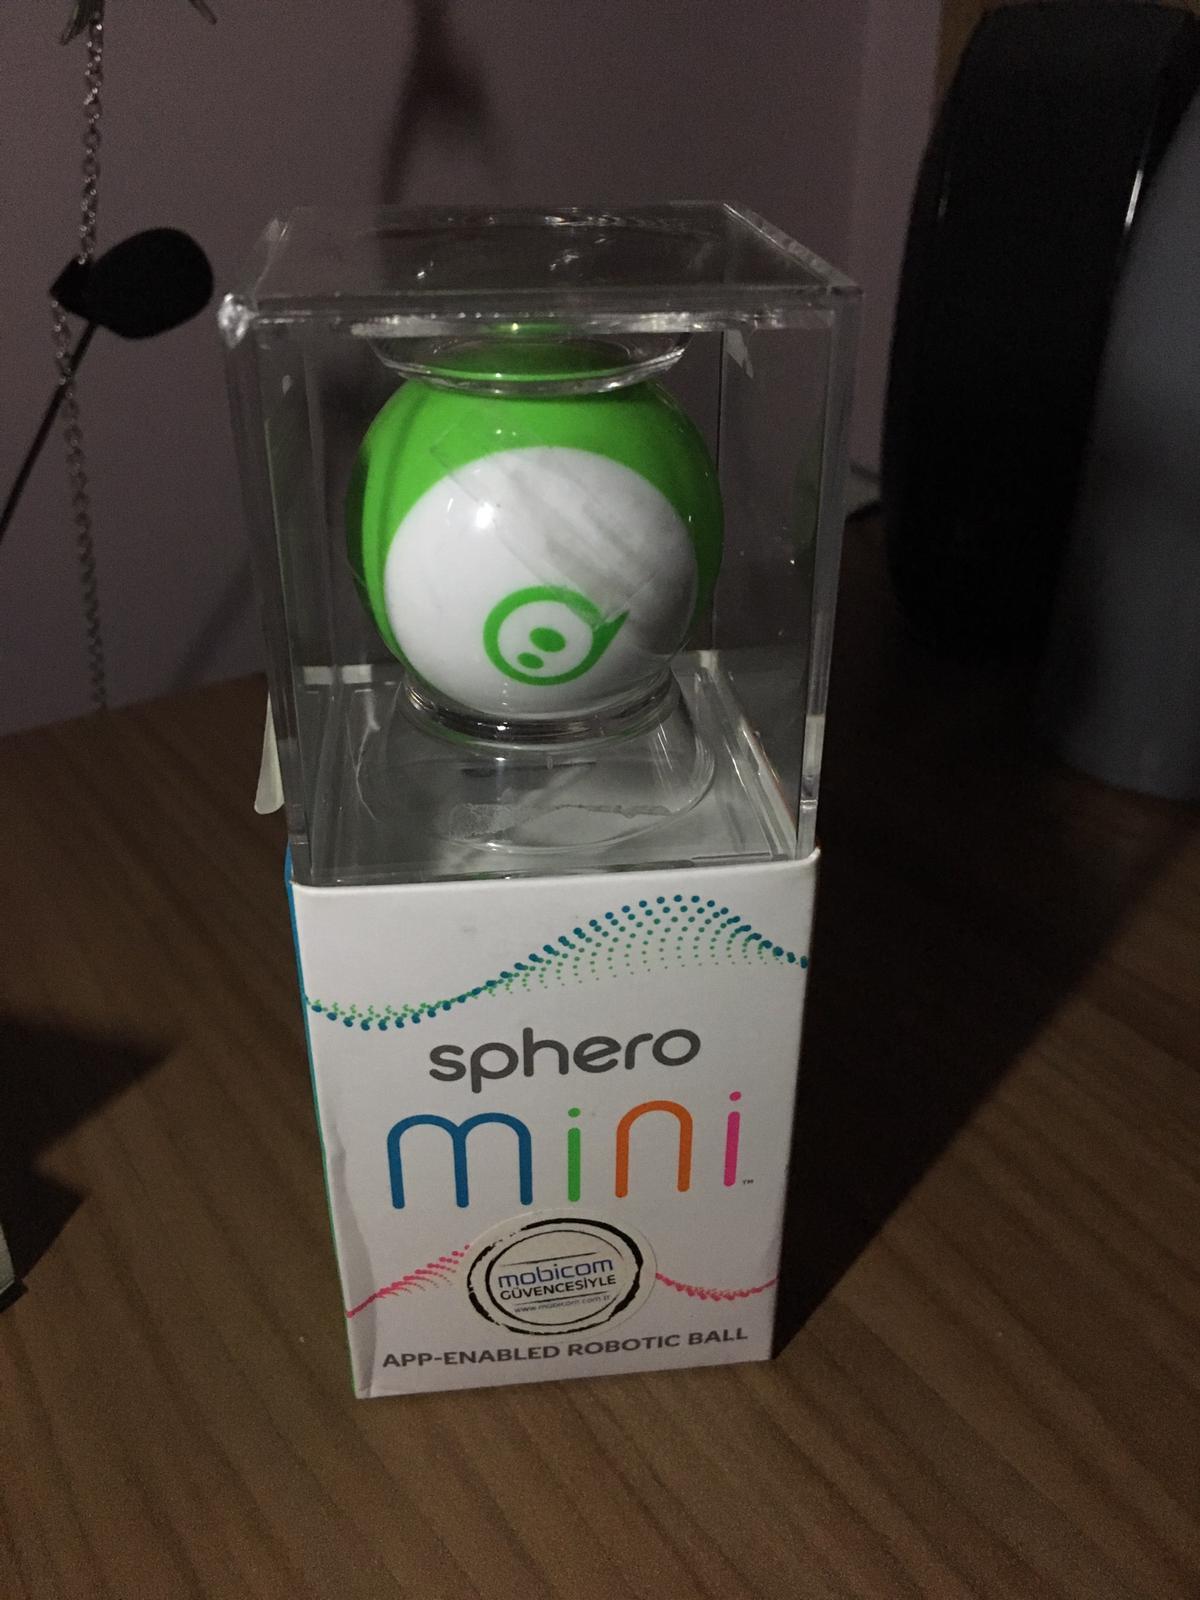 Sphero mini box